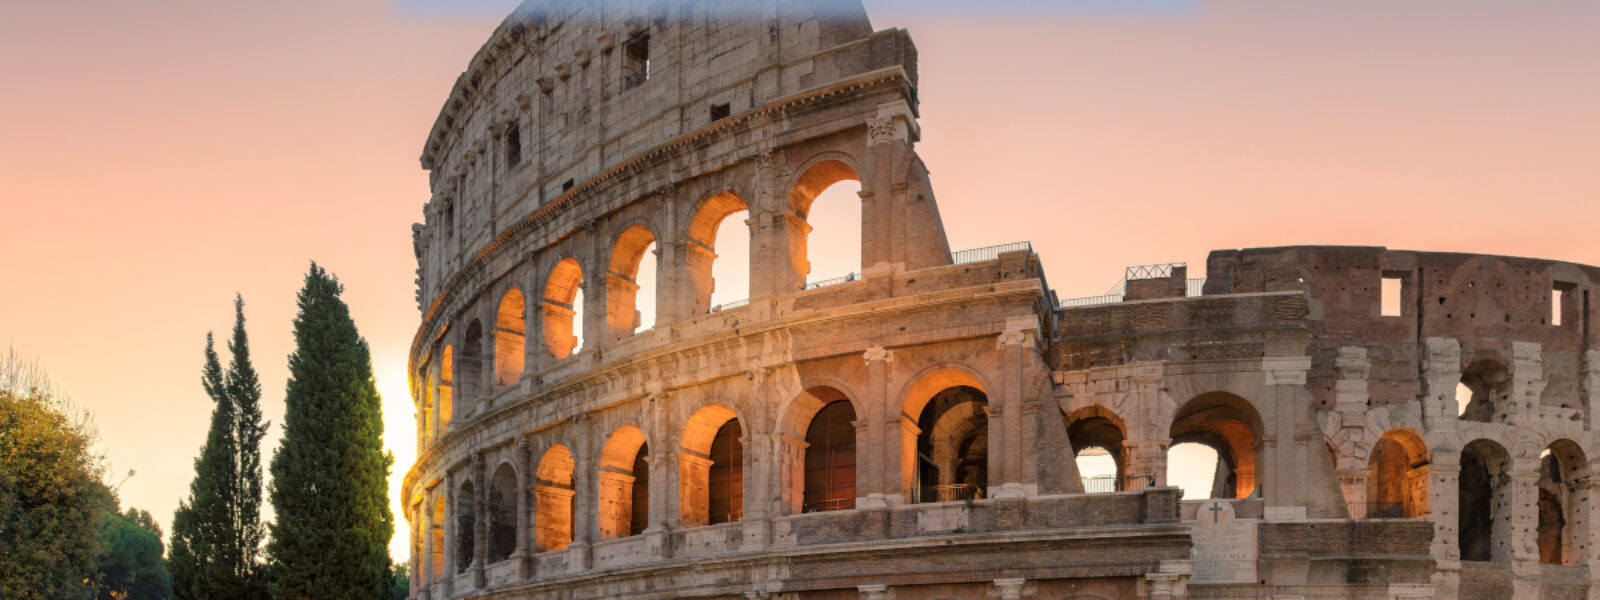 Adobe Stock227883696_Colosseum at sunrise, Rome, Italy